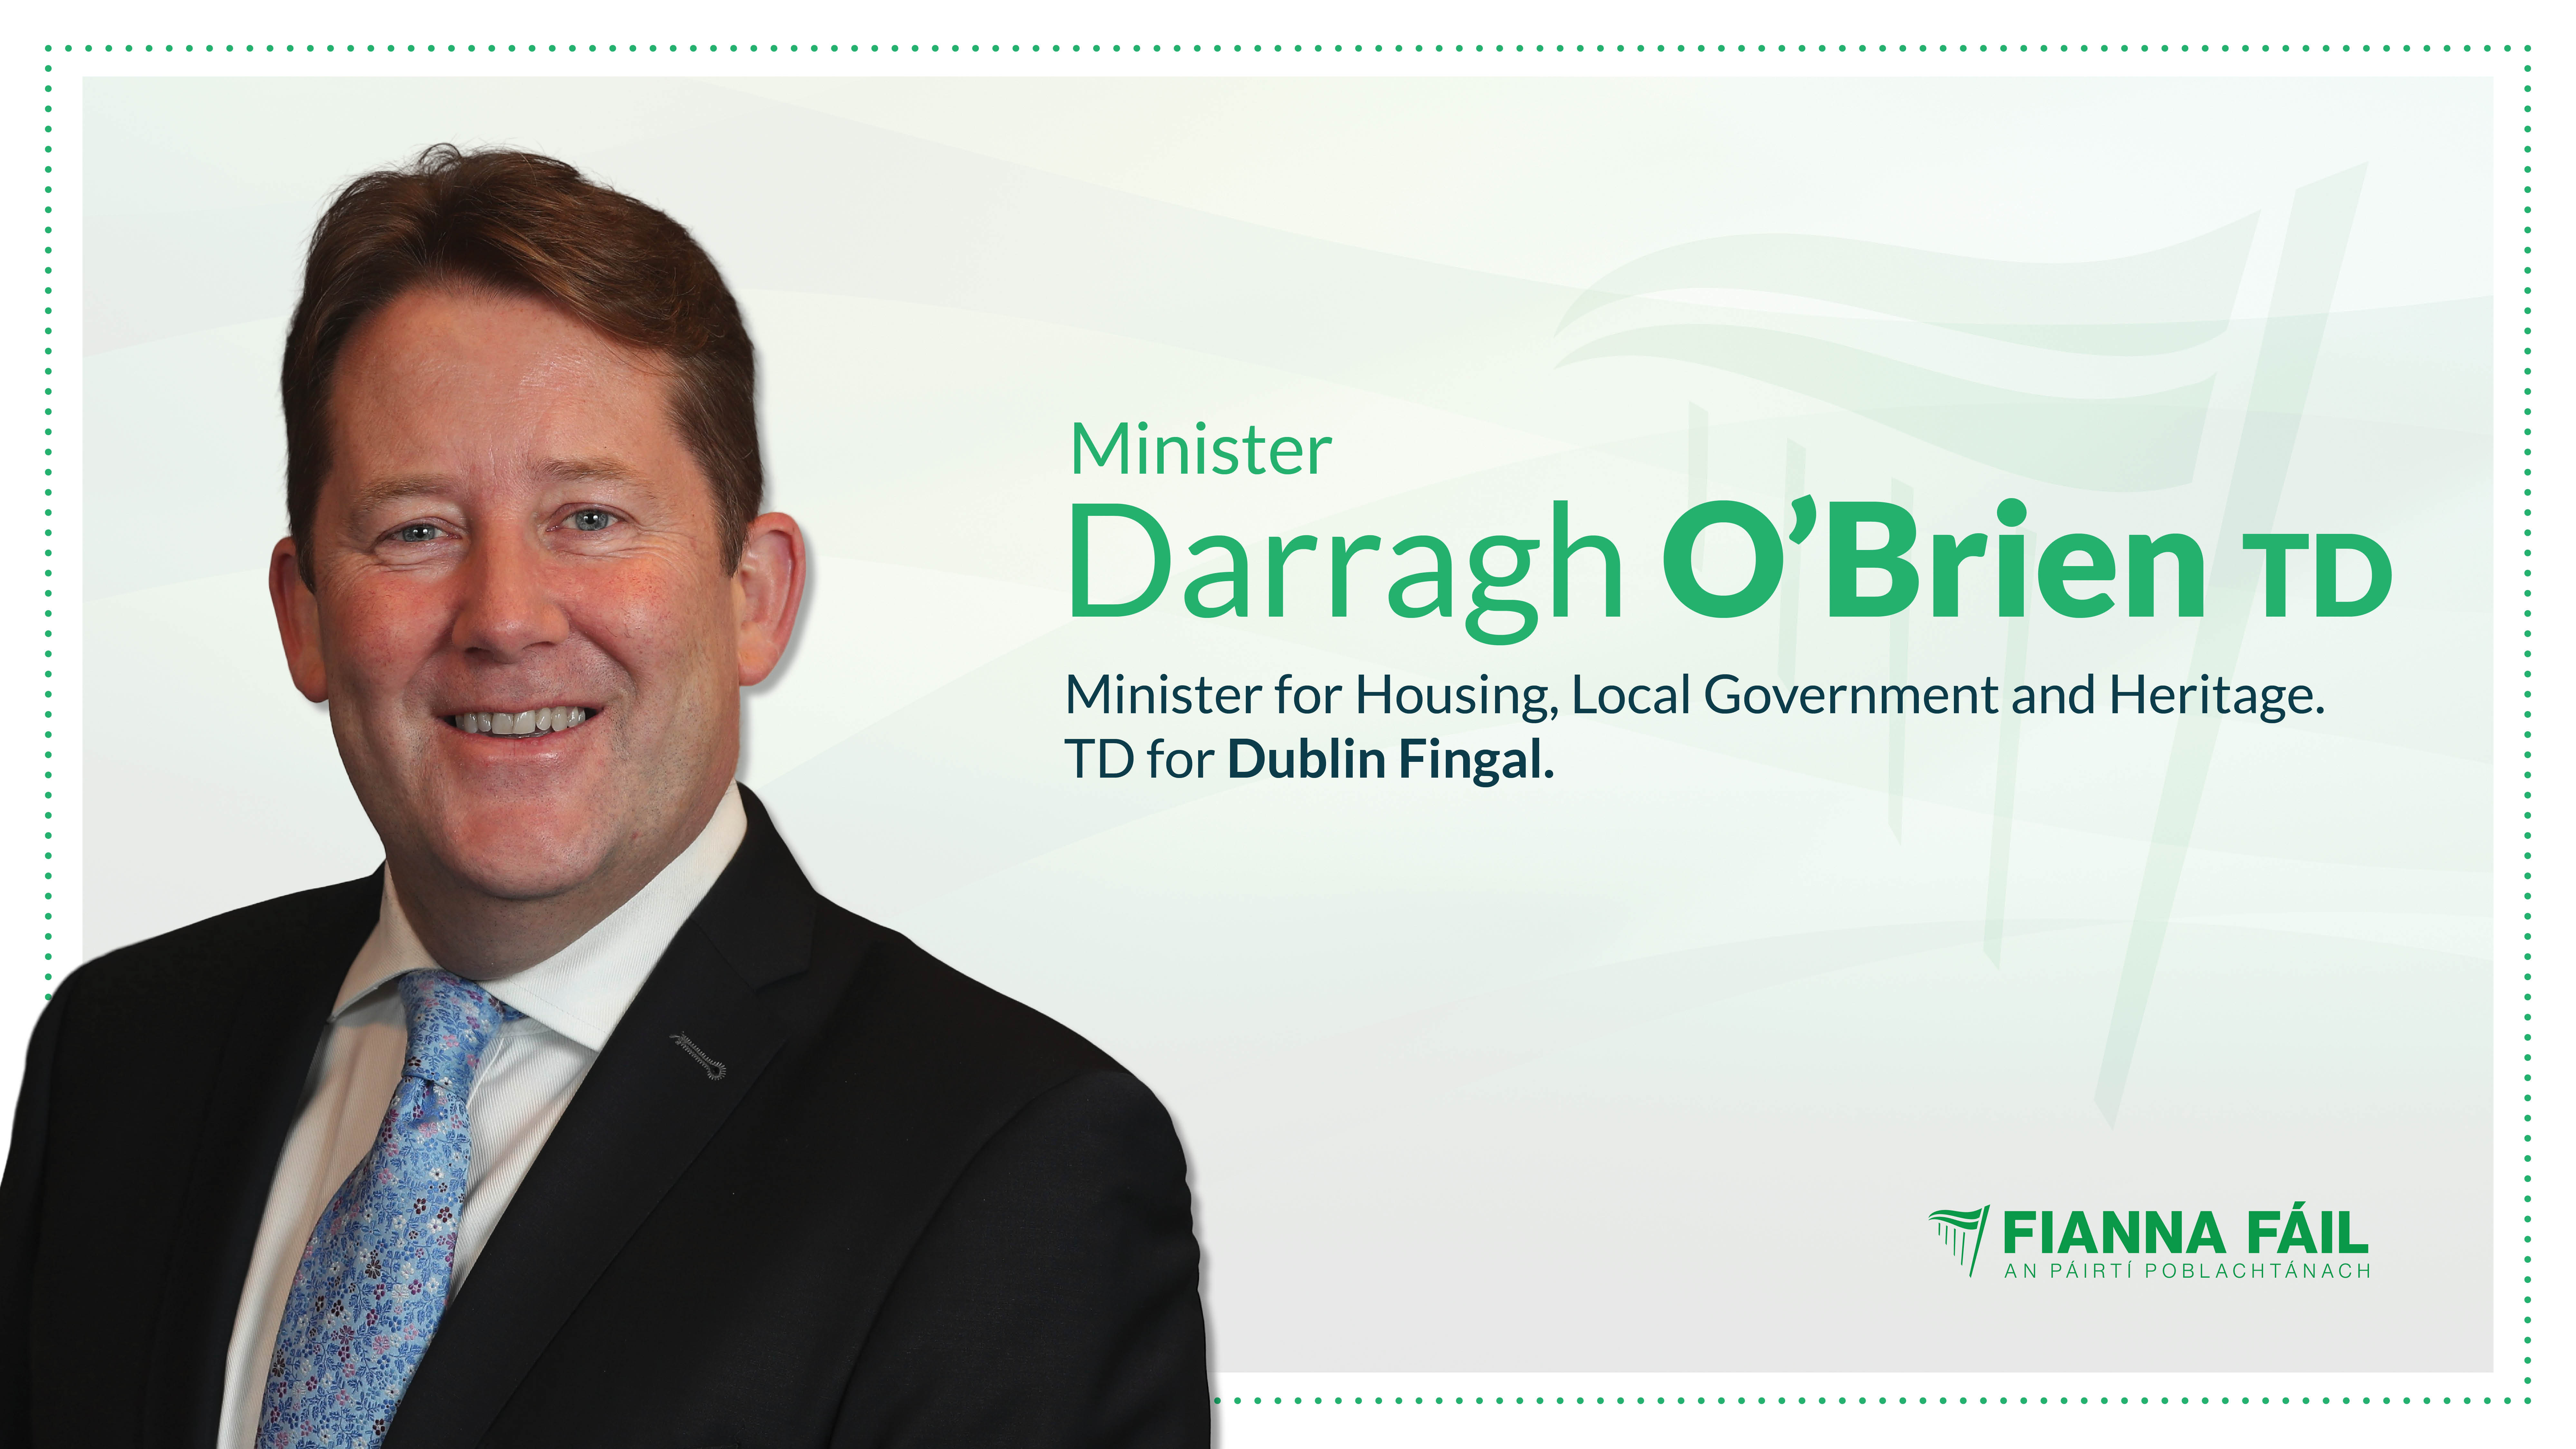 Speech by Darragh O’Brien TD, Minister for Housing, Local Government and Heritage, Fianna Fáil Ard Fhéis